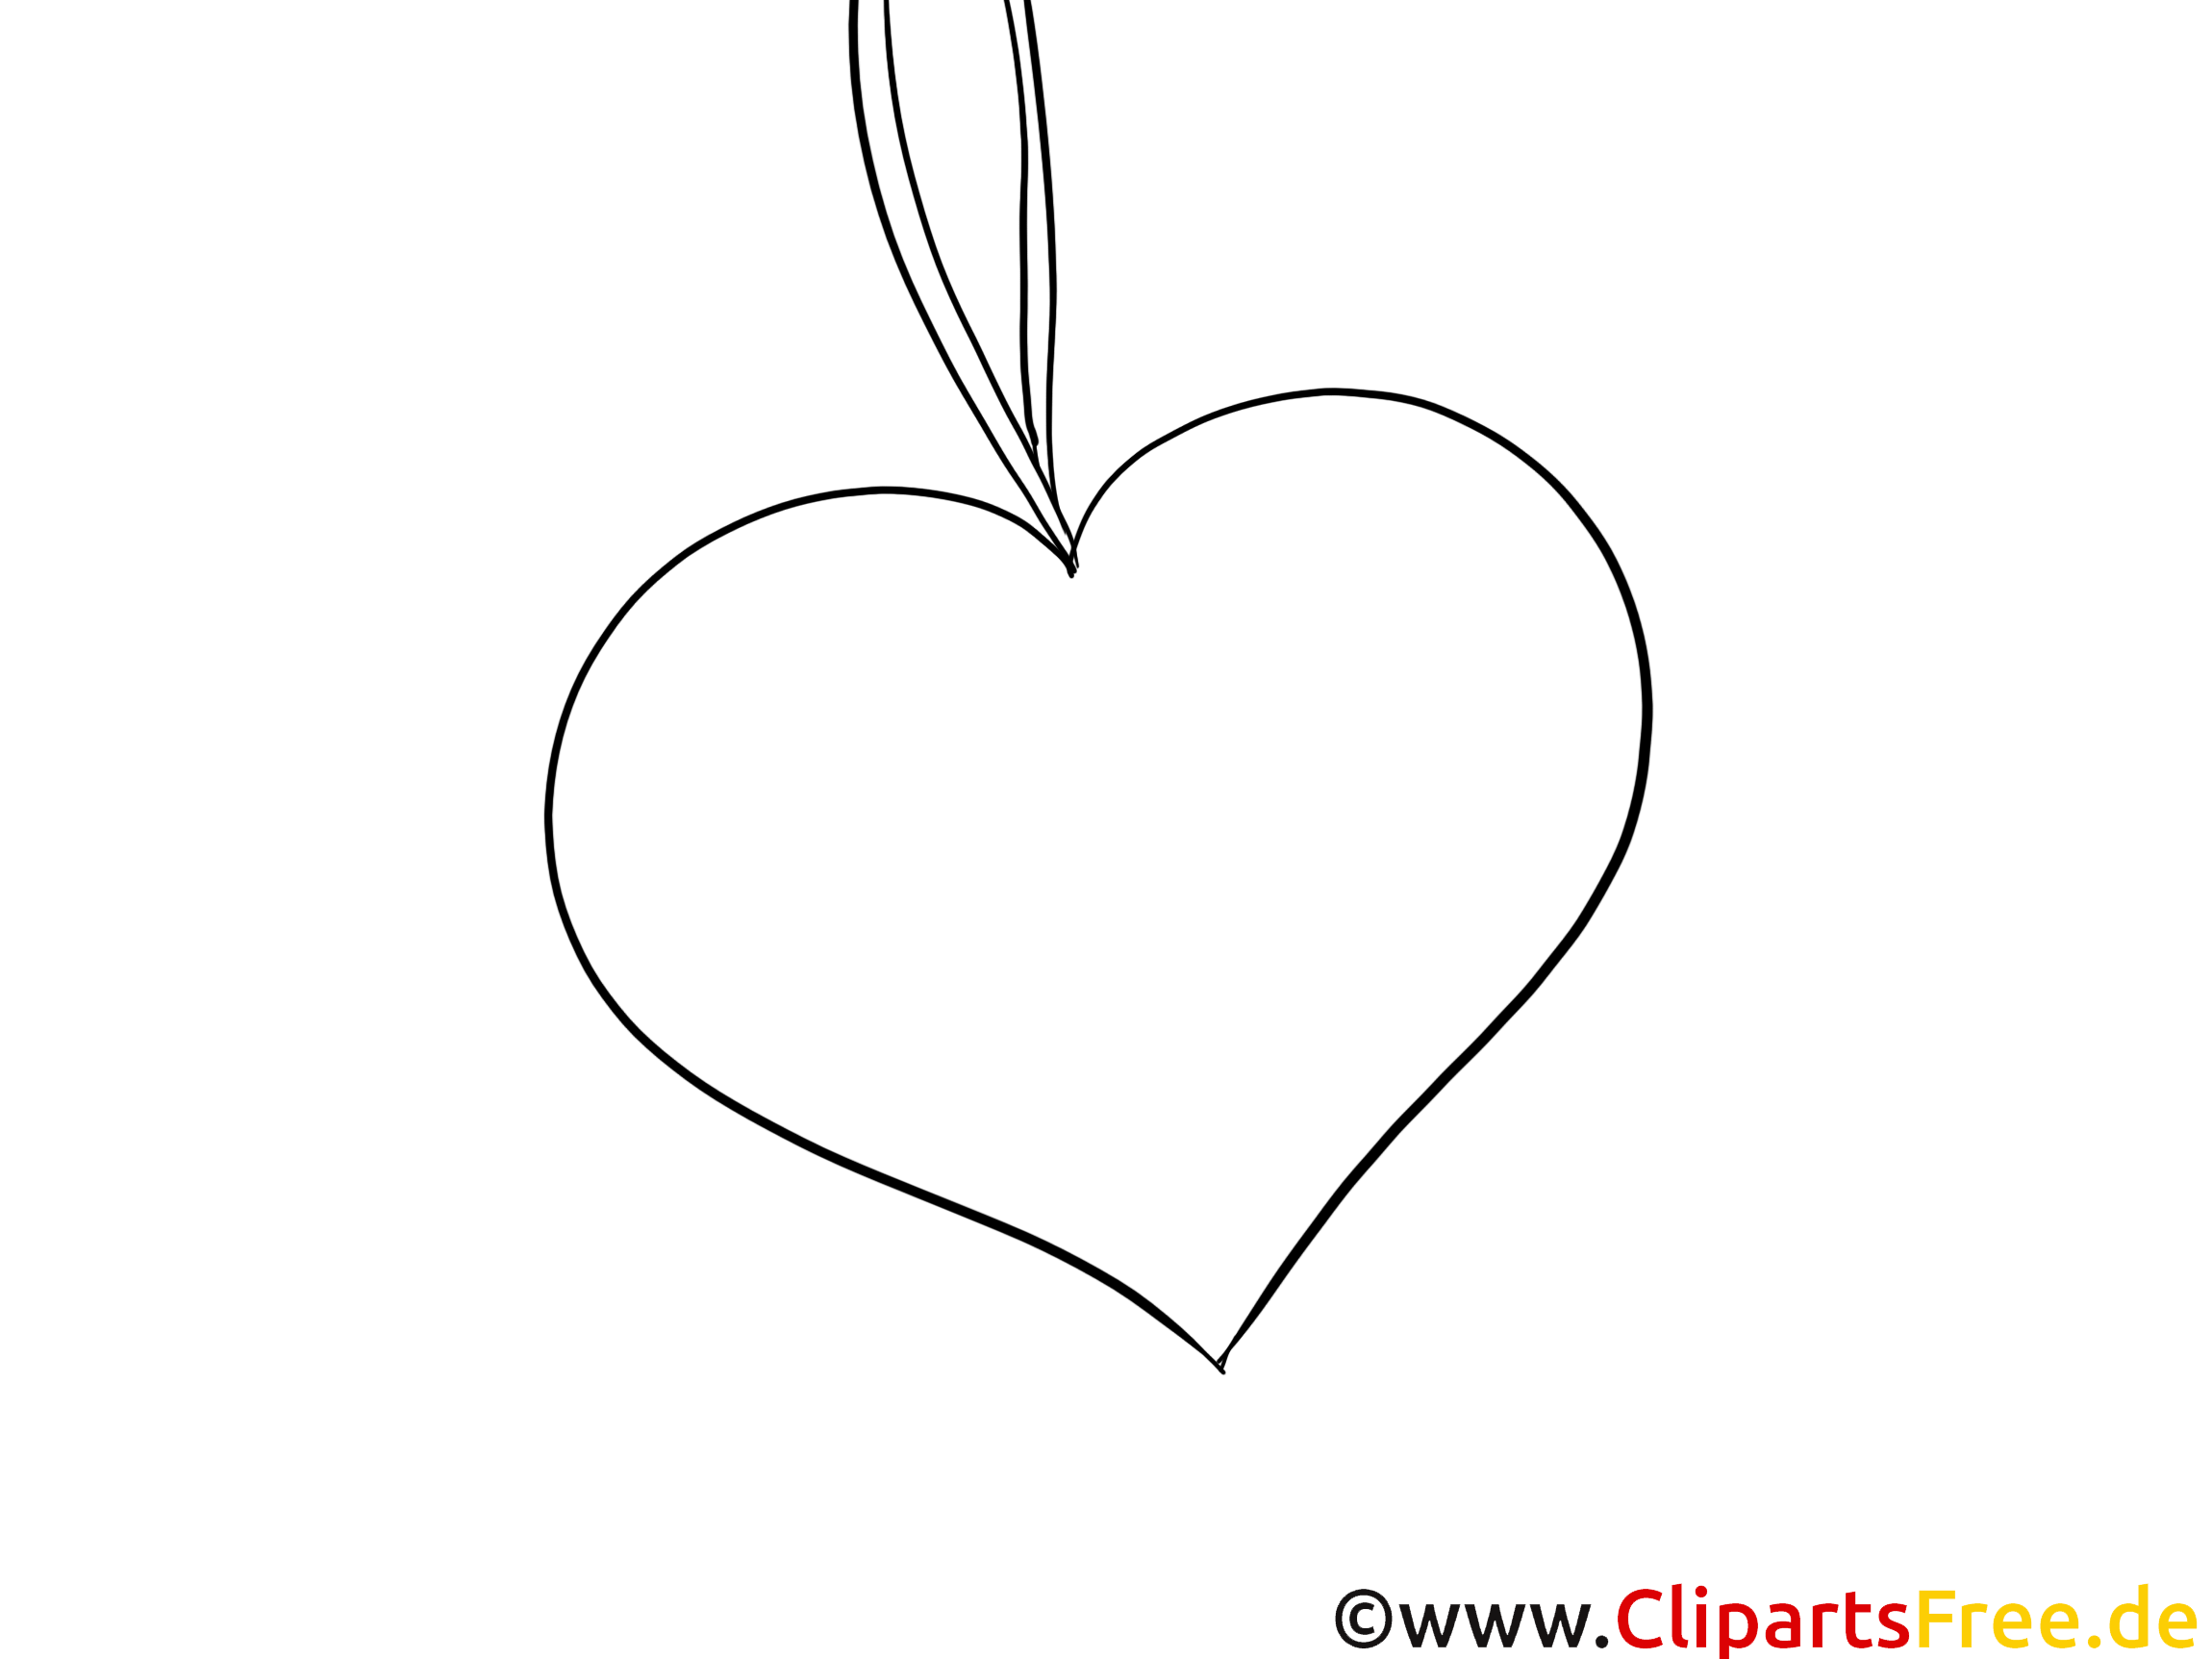 Clip arts coeur – Saint-valentin à imprimer